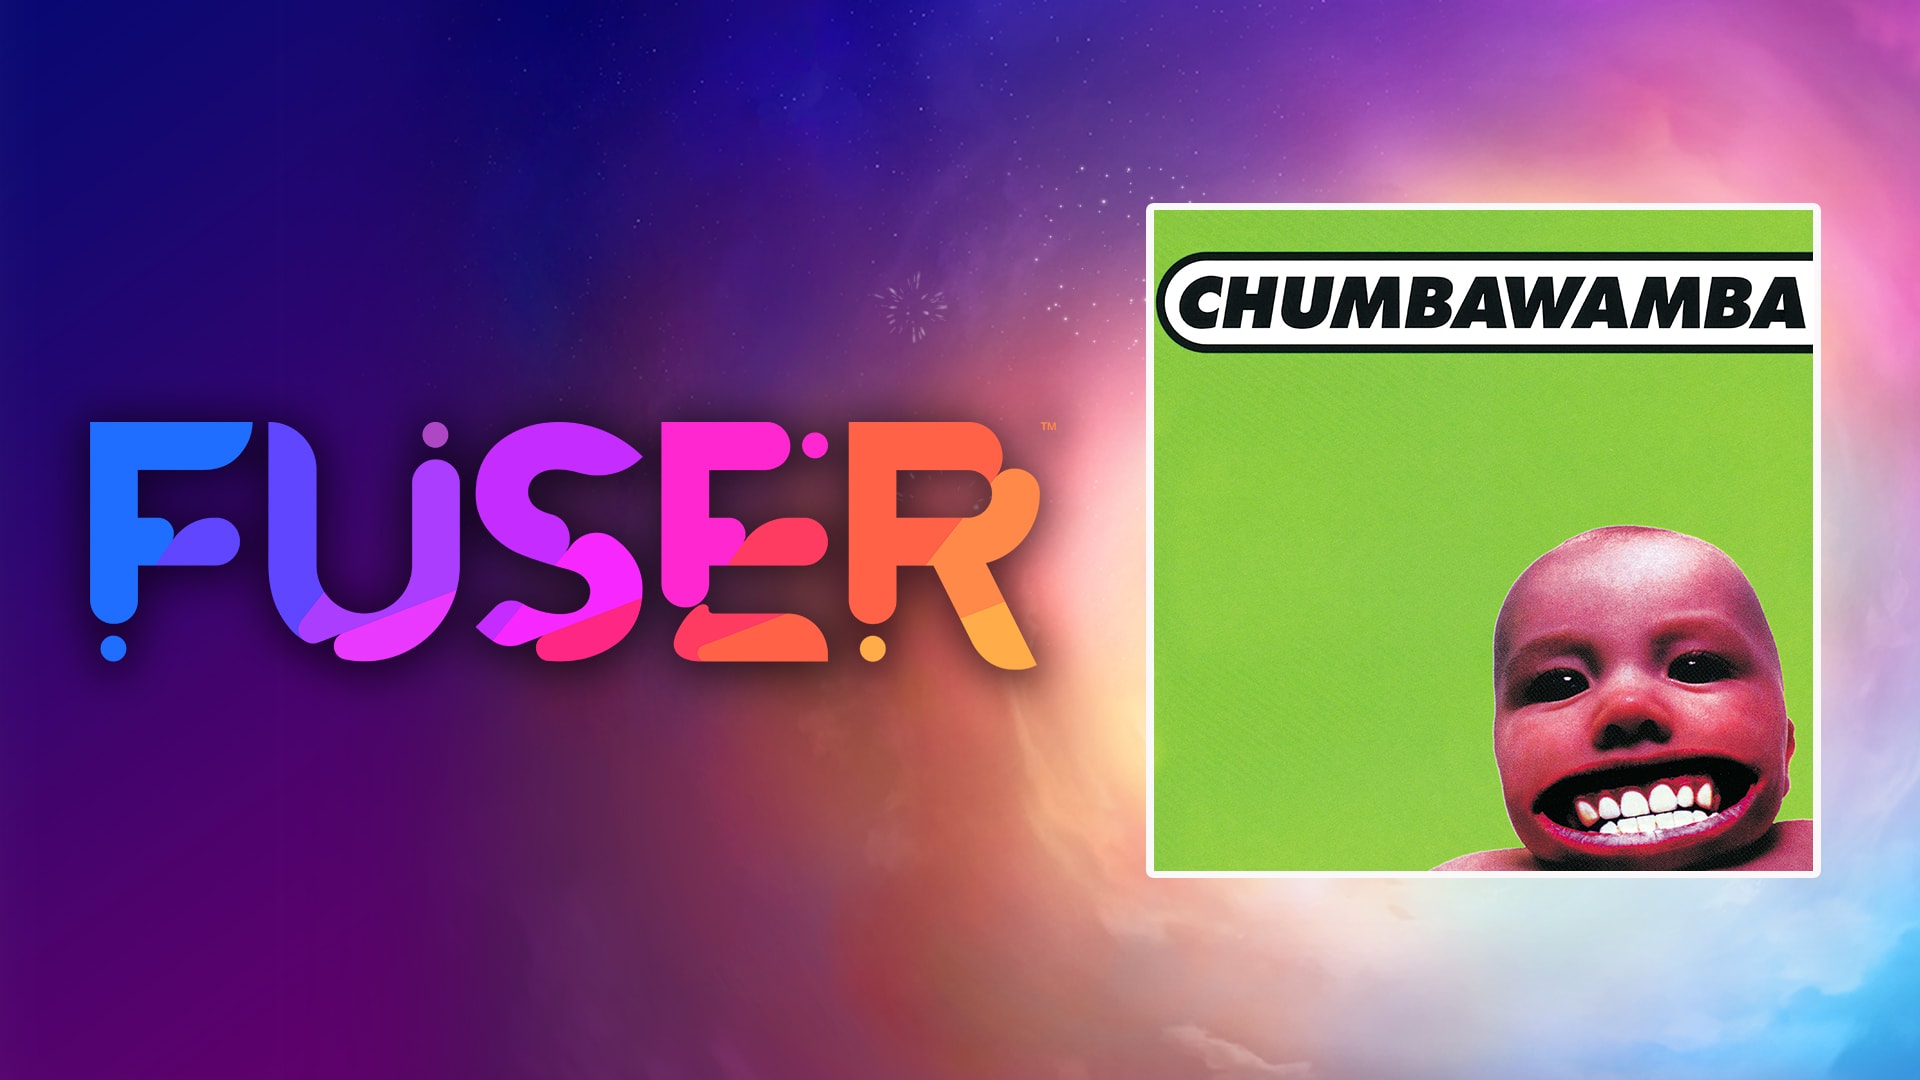 Chumbawamba - "Tubthumping"